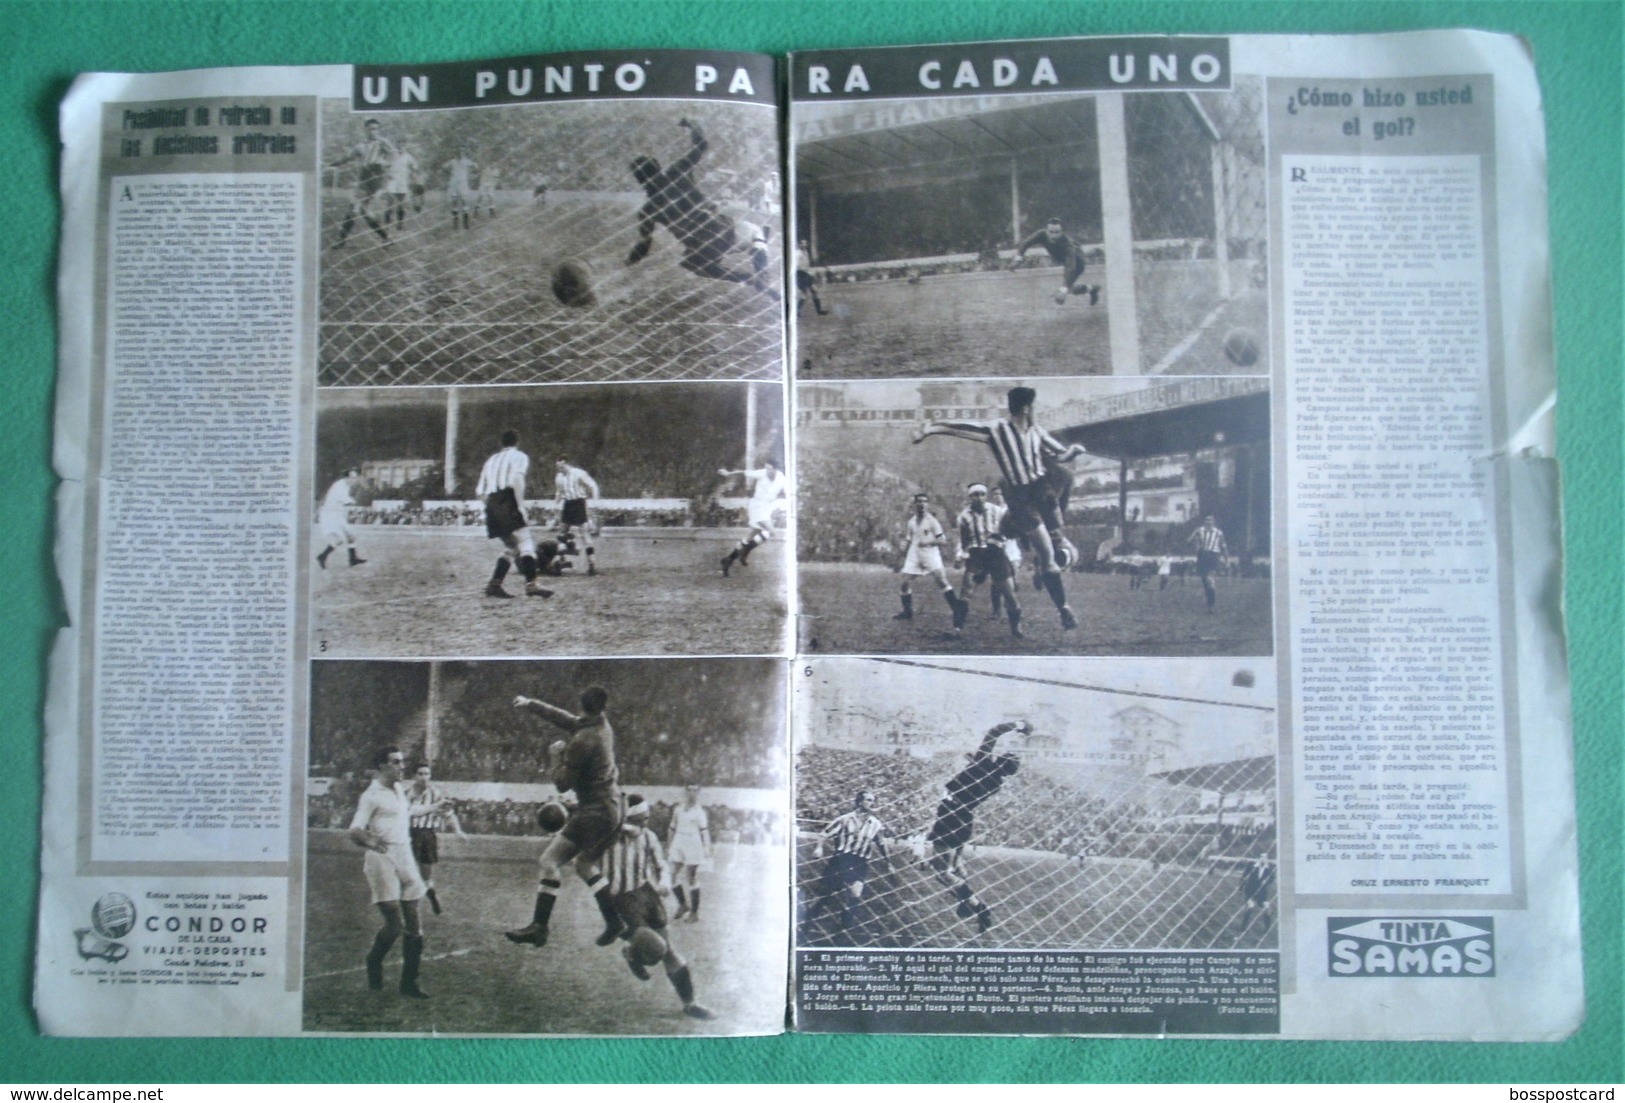 Madrid - Barcelona -  España - Periódico A Marca De 1947 - Fútbol - Football - Estadio - Stadium - [4] Themes